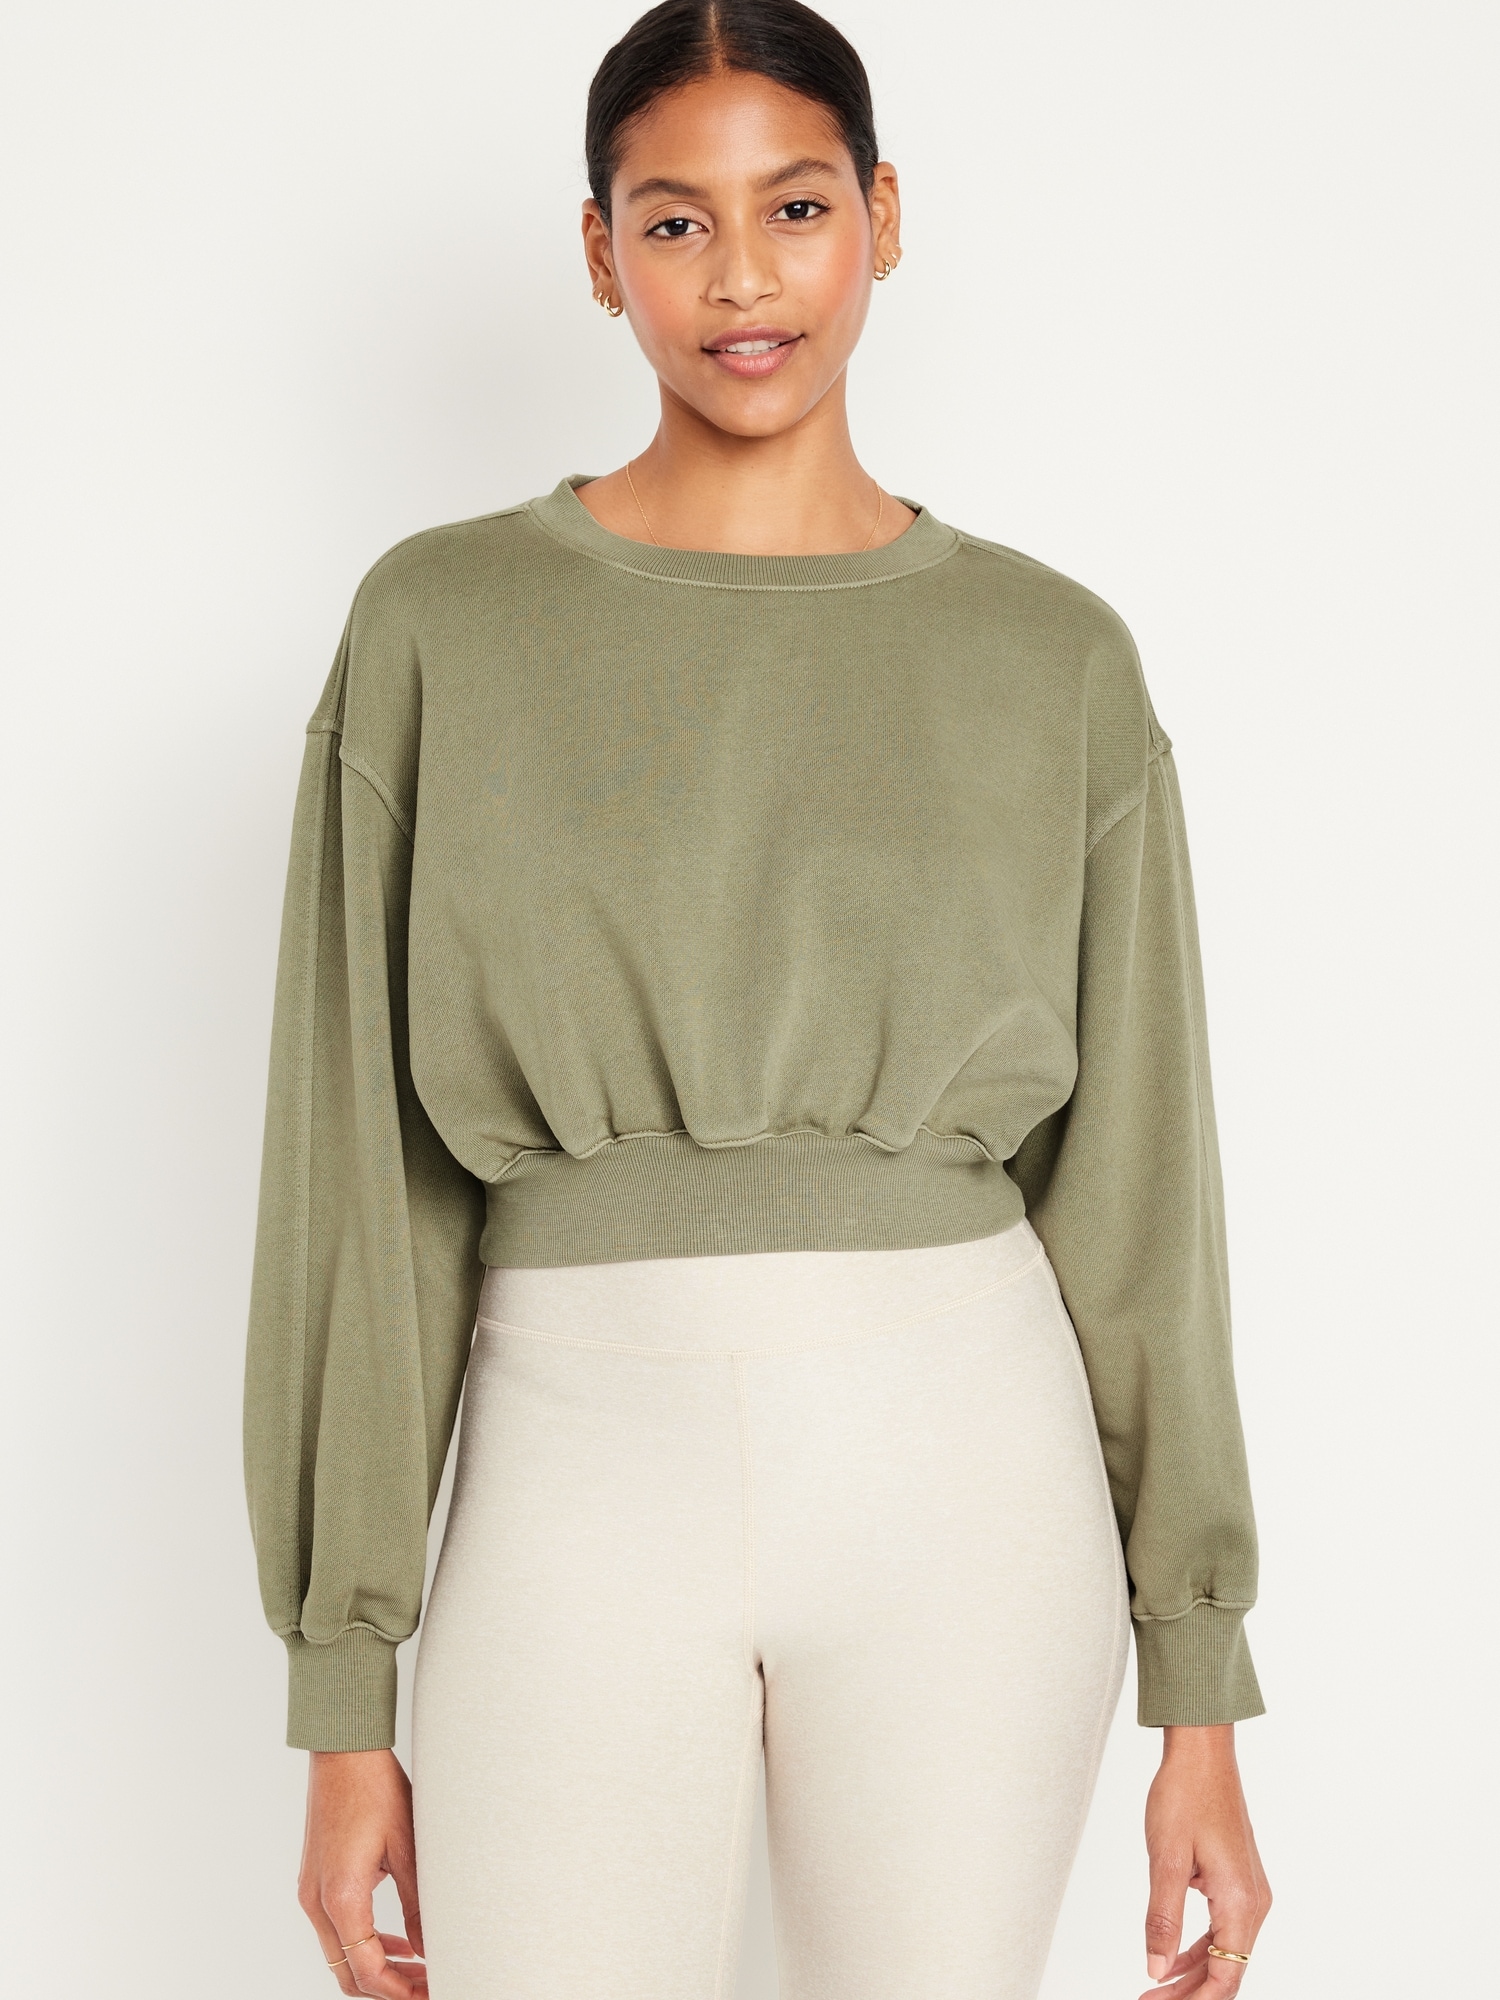 Women's Pullover Cropped Sweatshirt Crew Neck Long Sleeve Fleece Crop Tops  A0882 Beige#Medium at  Women's Clothing store